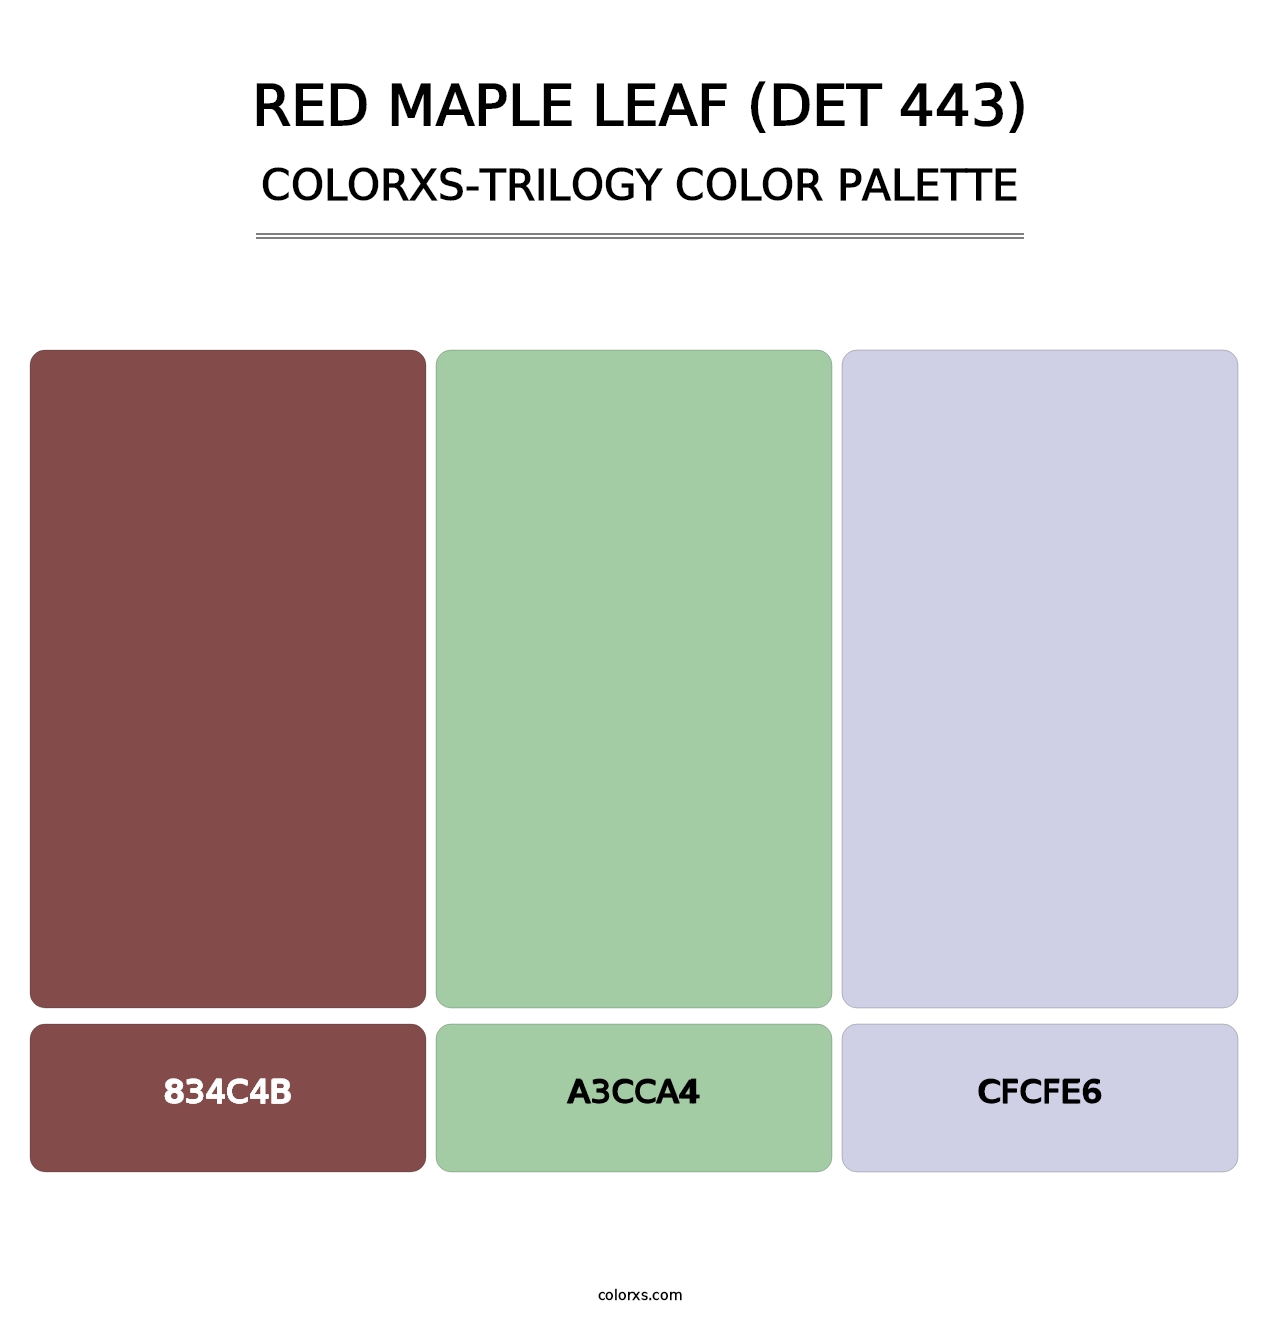 Red Maple Leaf (DET 443) - Colorxs Trilogy Palette